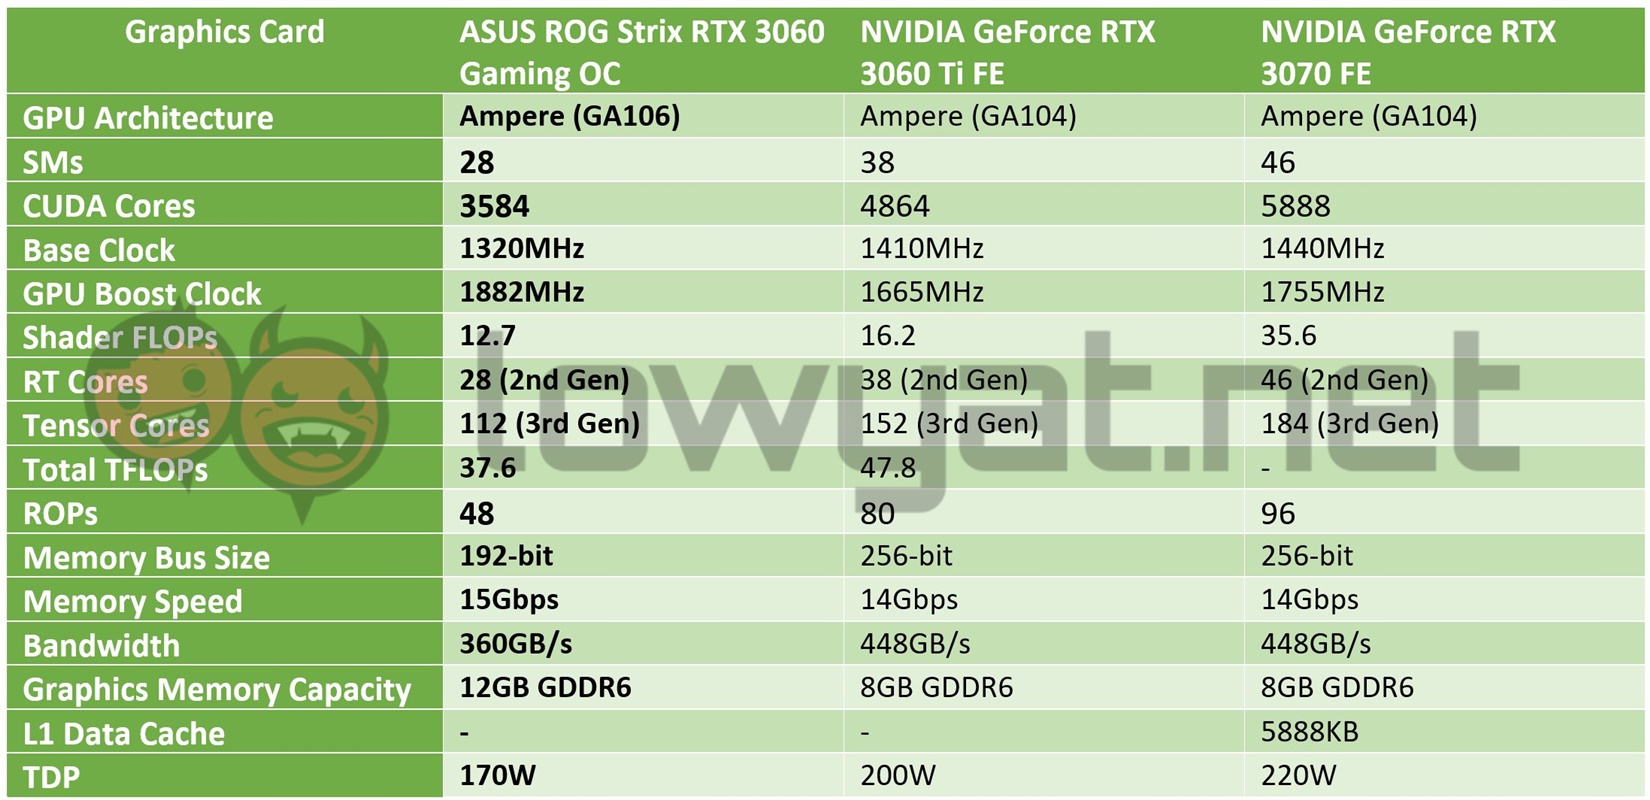 ASUS ROG Strix RTX 3060 Gaming OC specs sheet